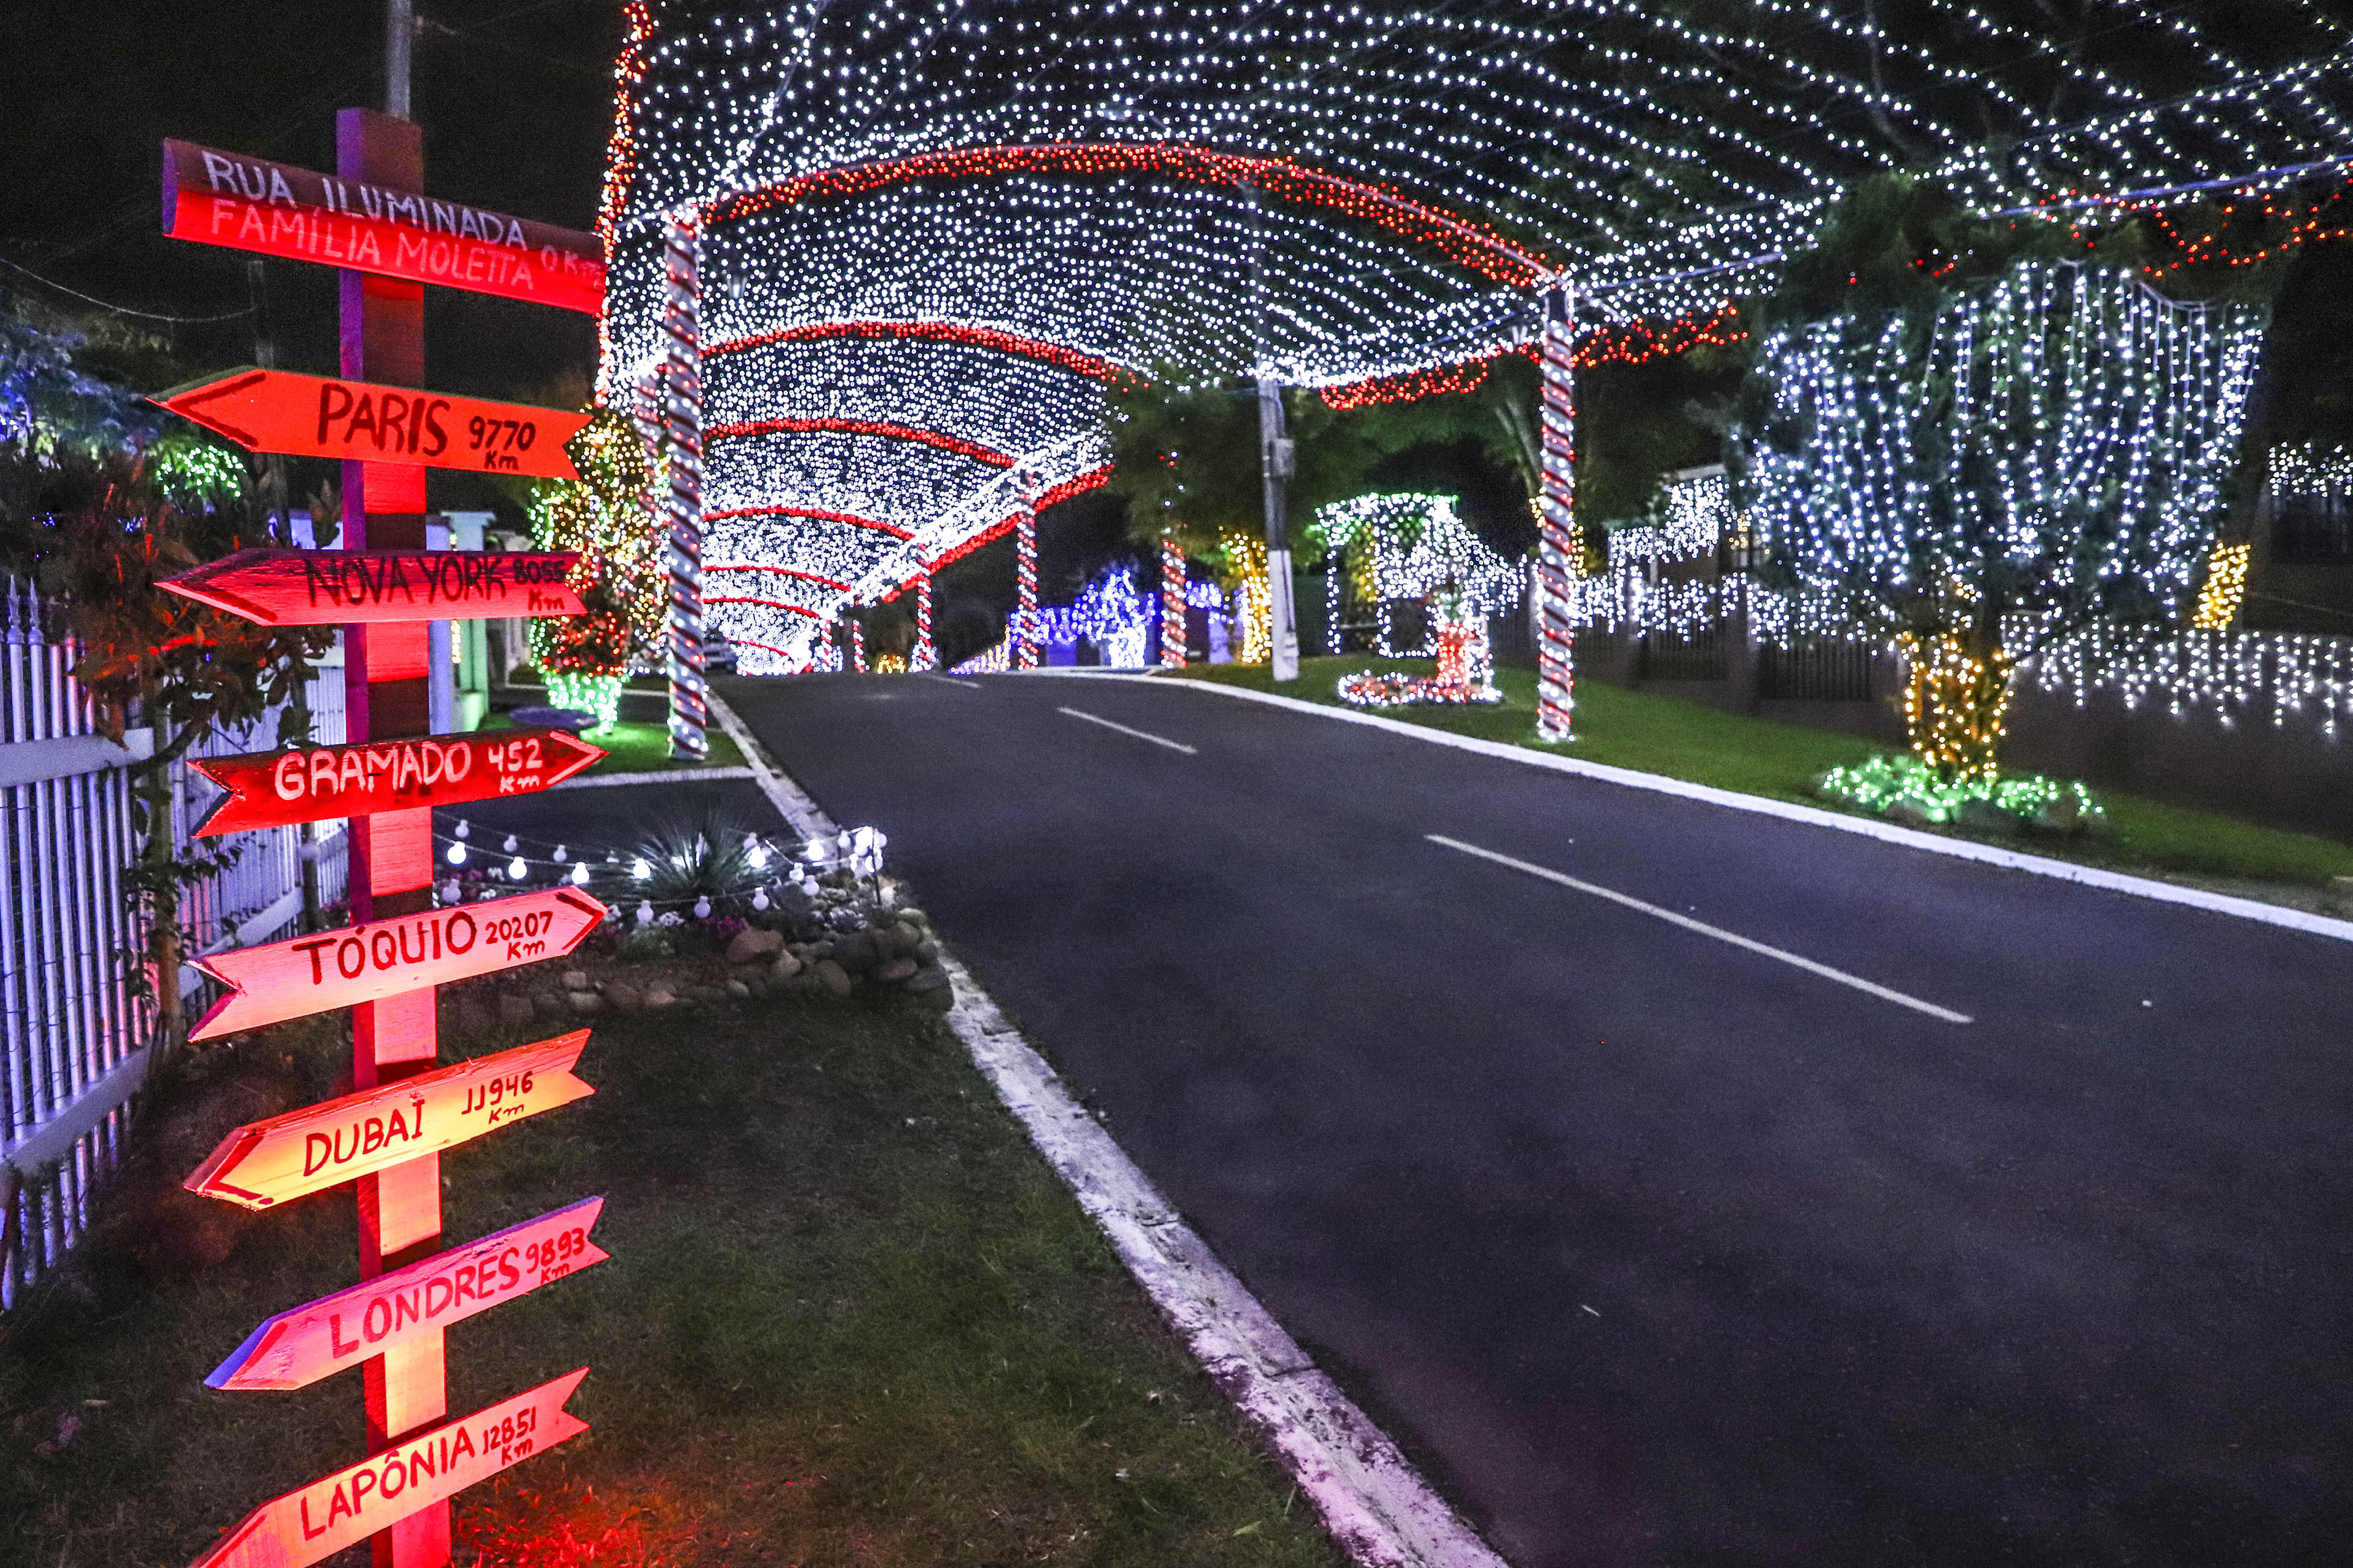 ParkShoppingBarigui tem espetáculo de Natal para receber o Papai Noel